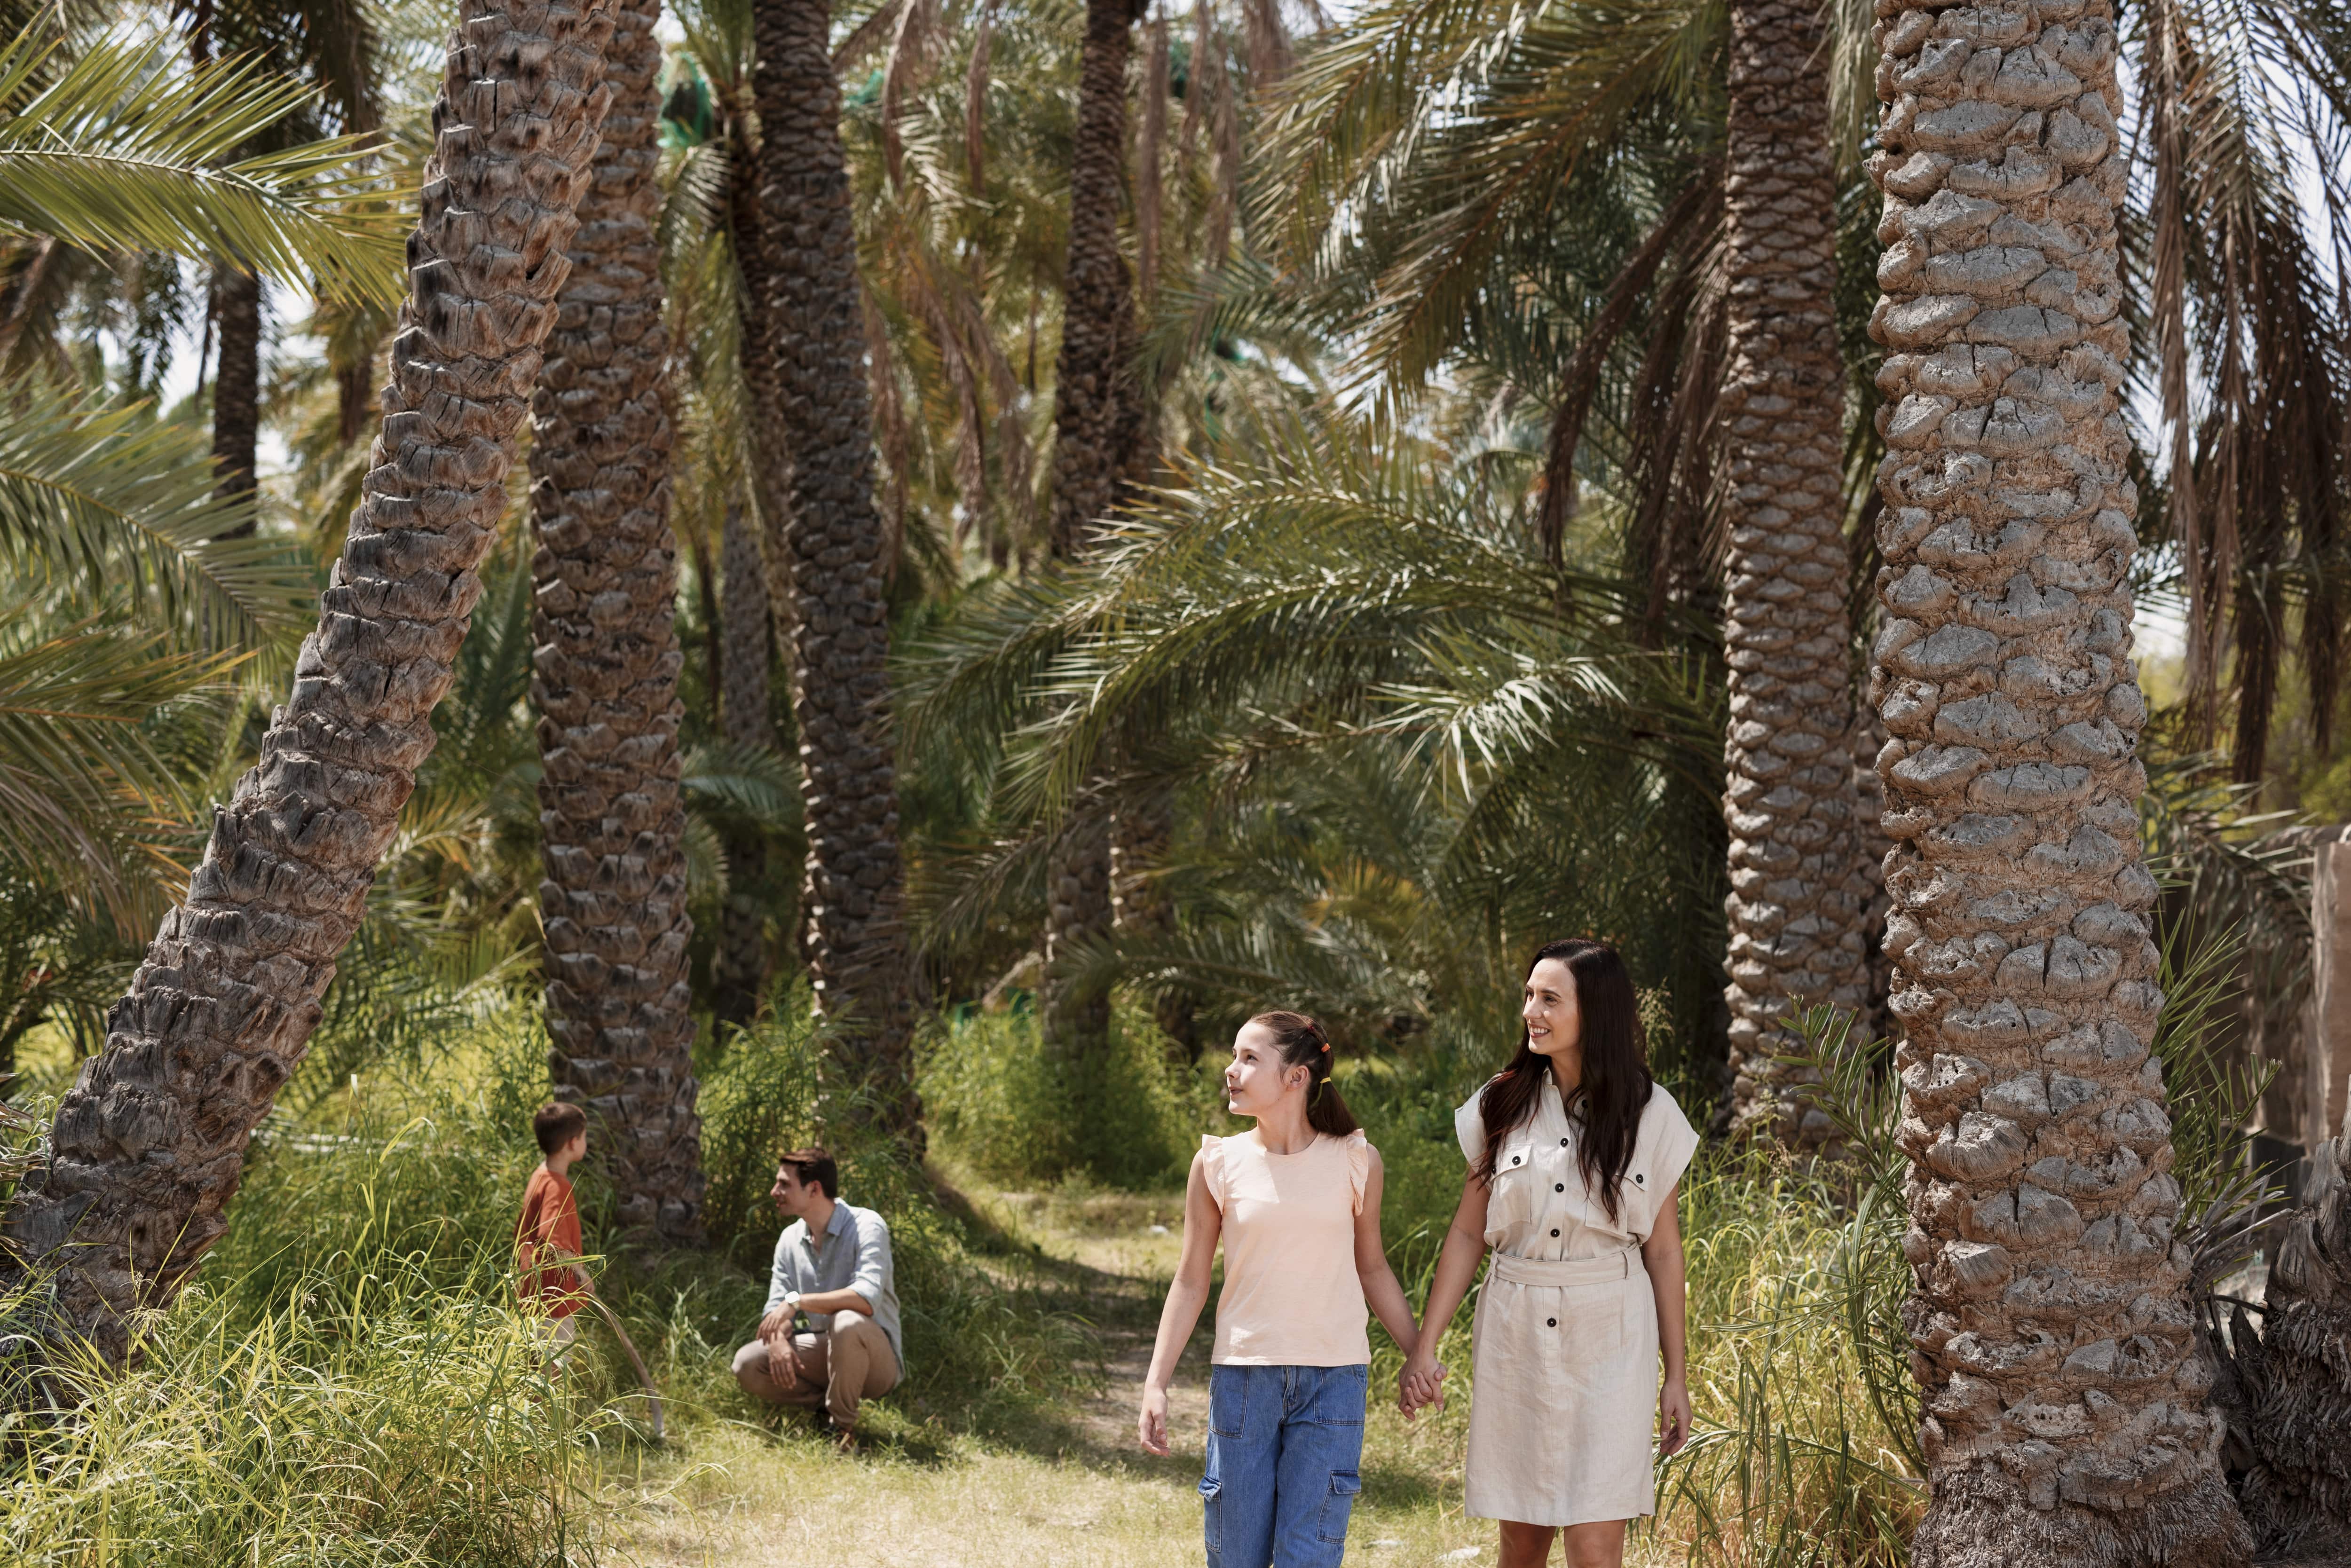 Stroll around Al Ain Oasis